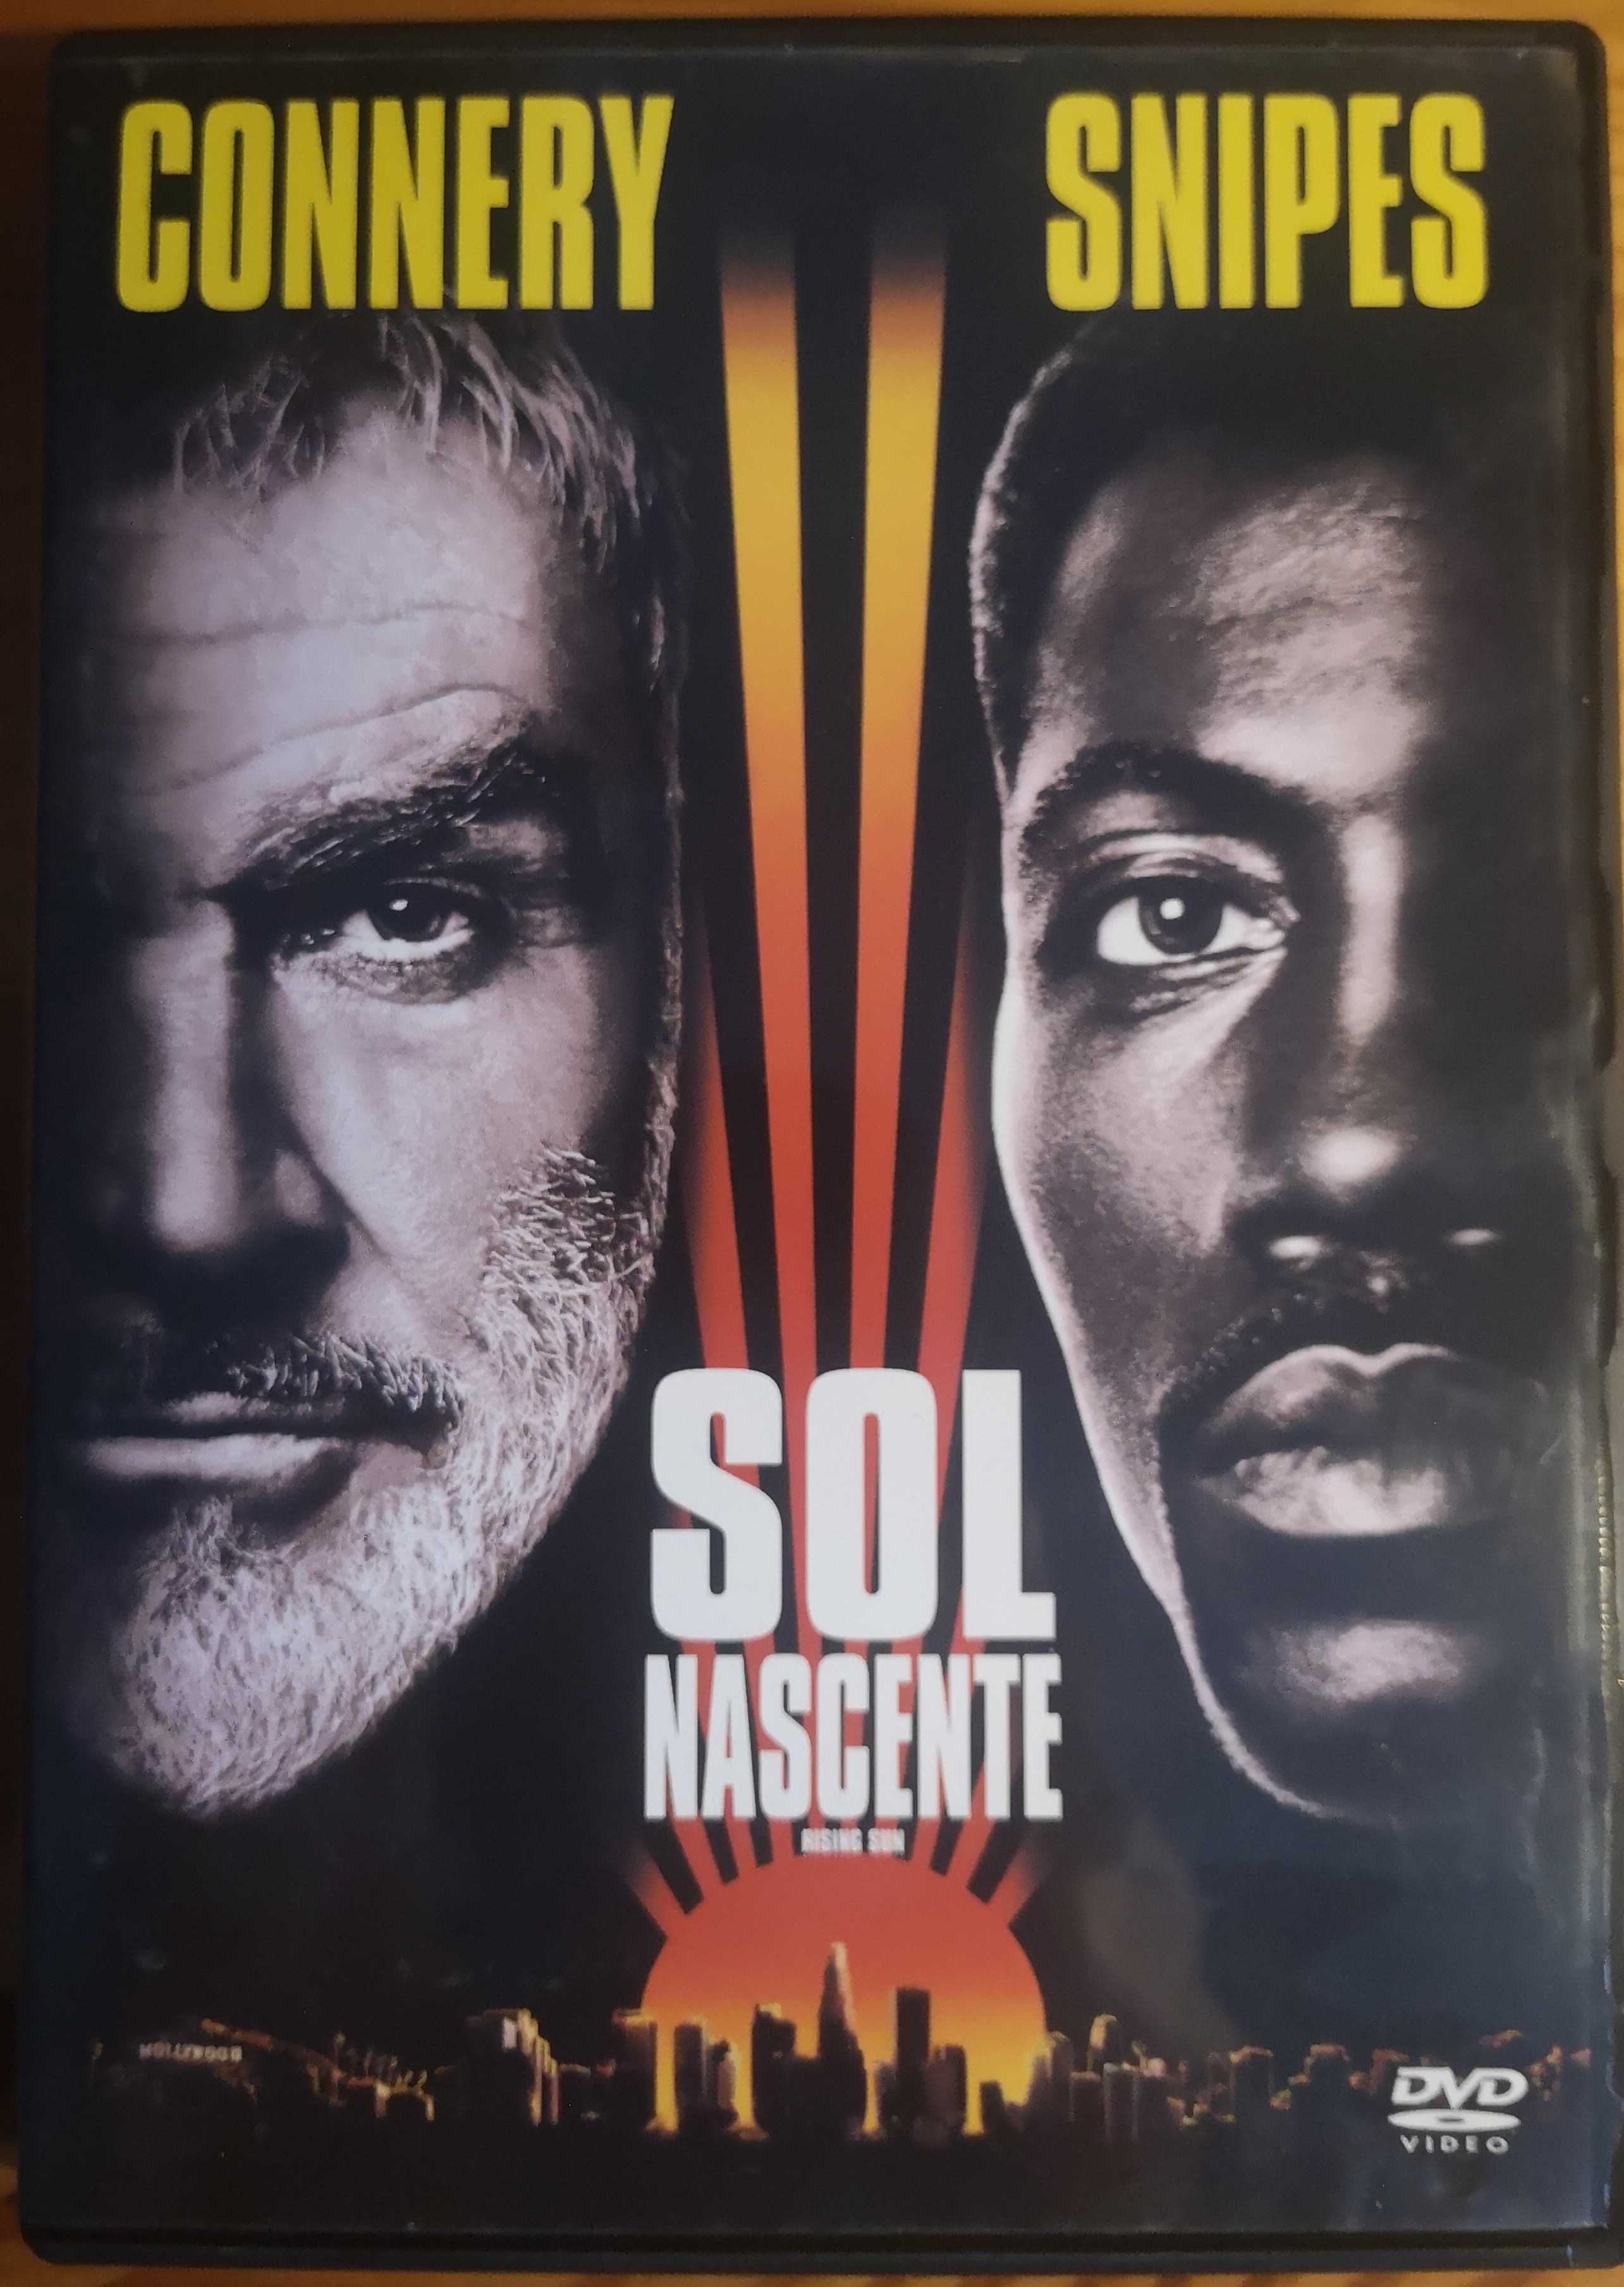 DVD "Sol Nascente"